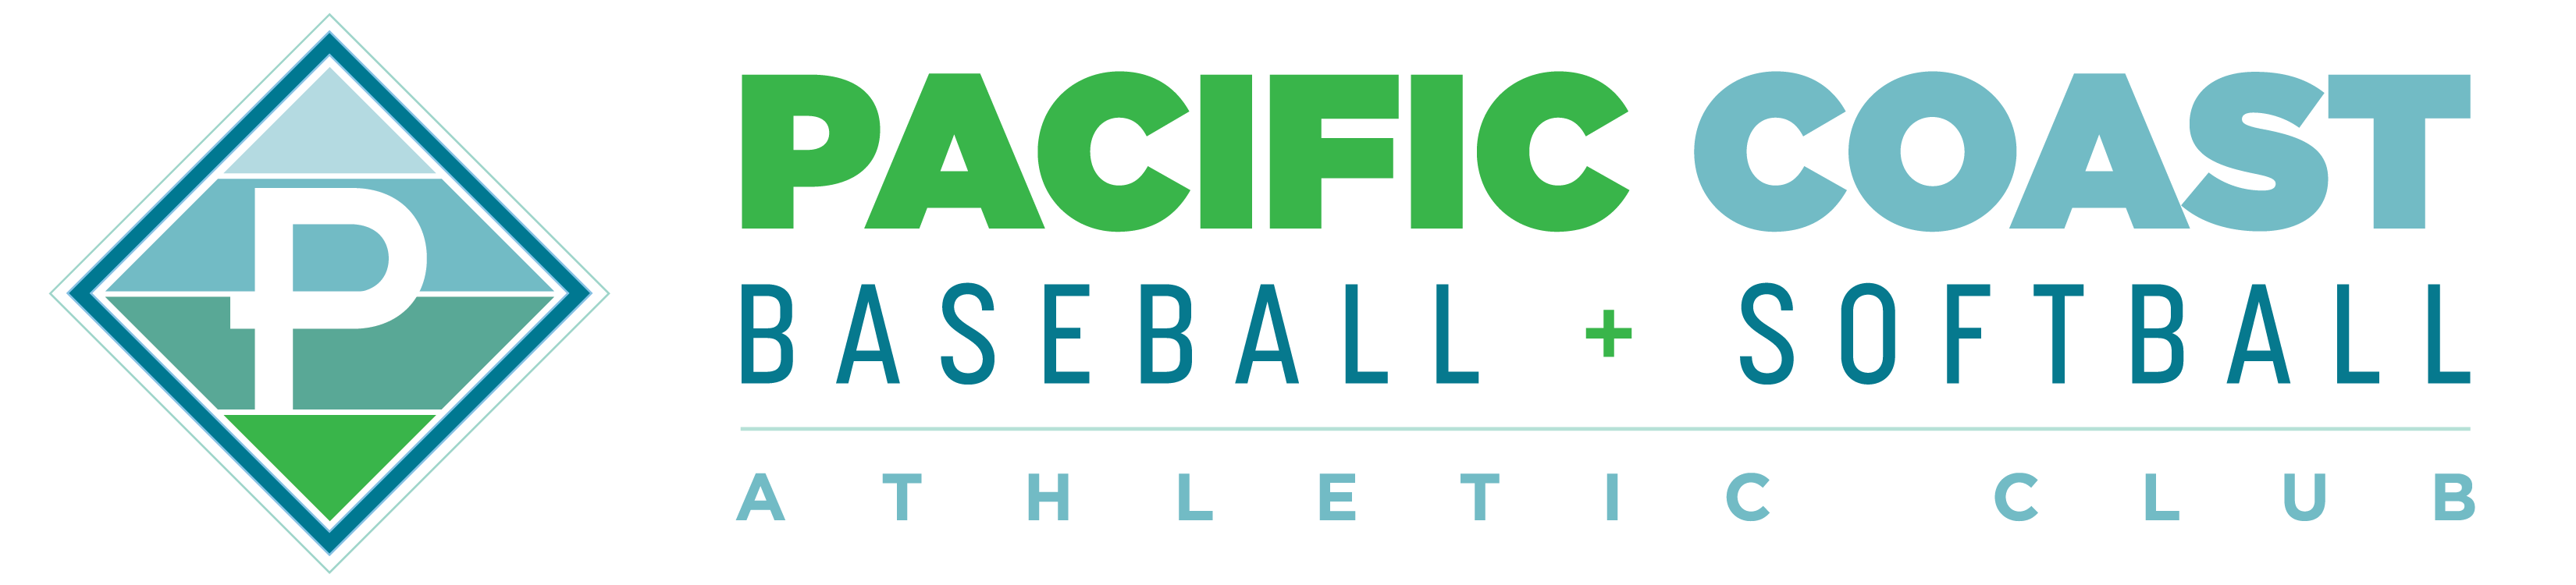 Pacific Coast Baseball+Softball Athletic Club